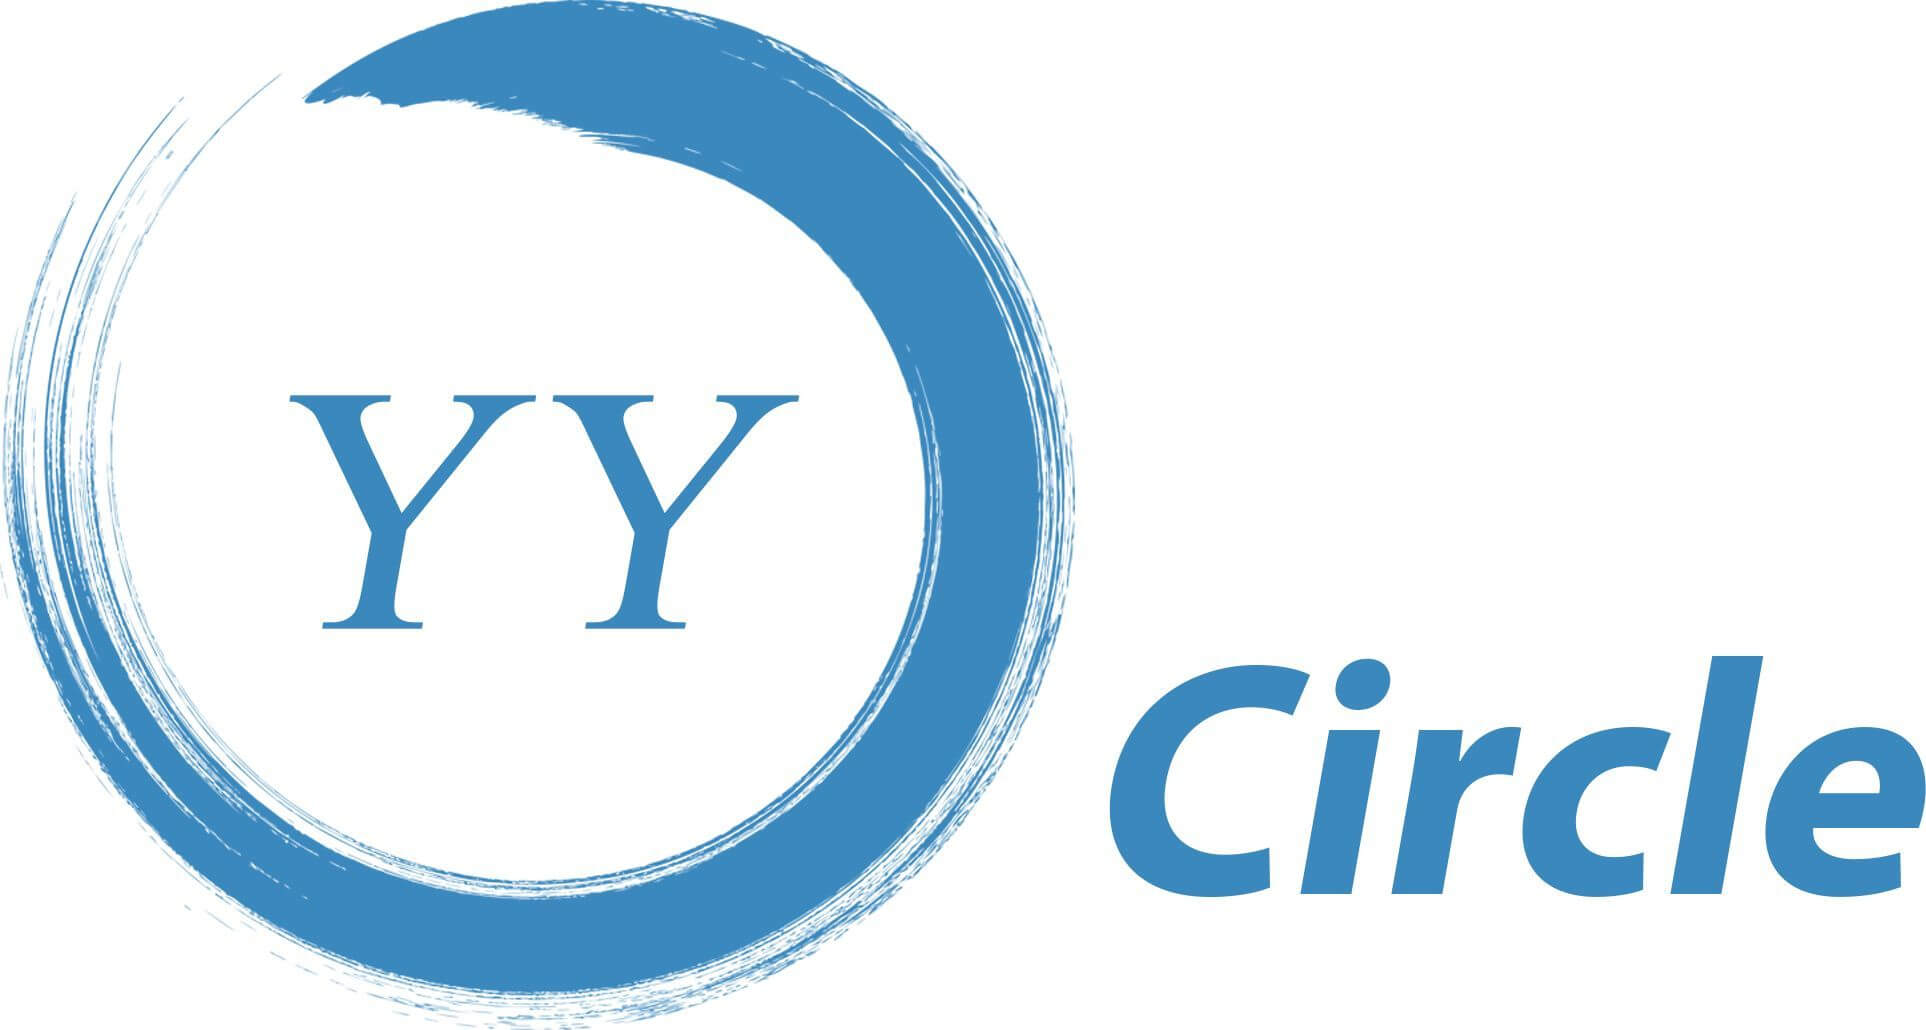 Yy Circle (sg) Private Limited company logo